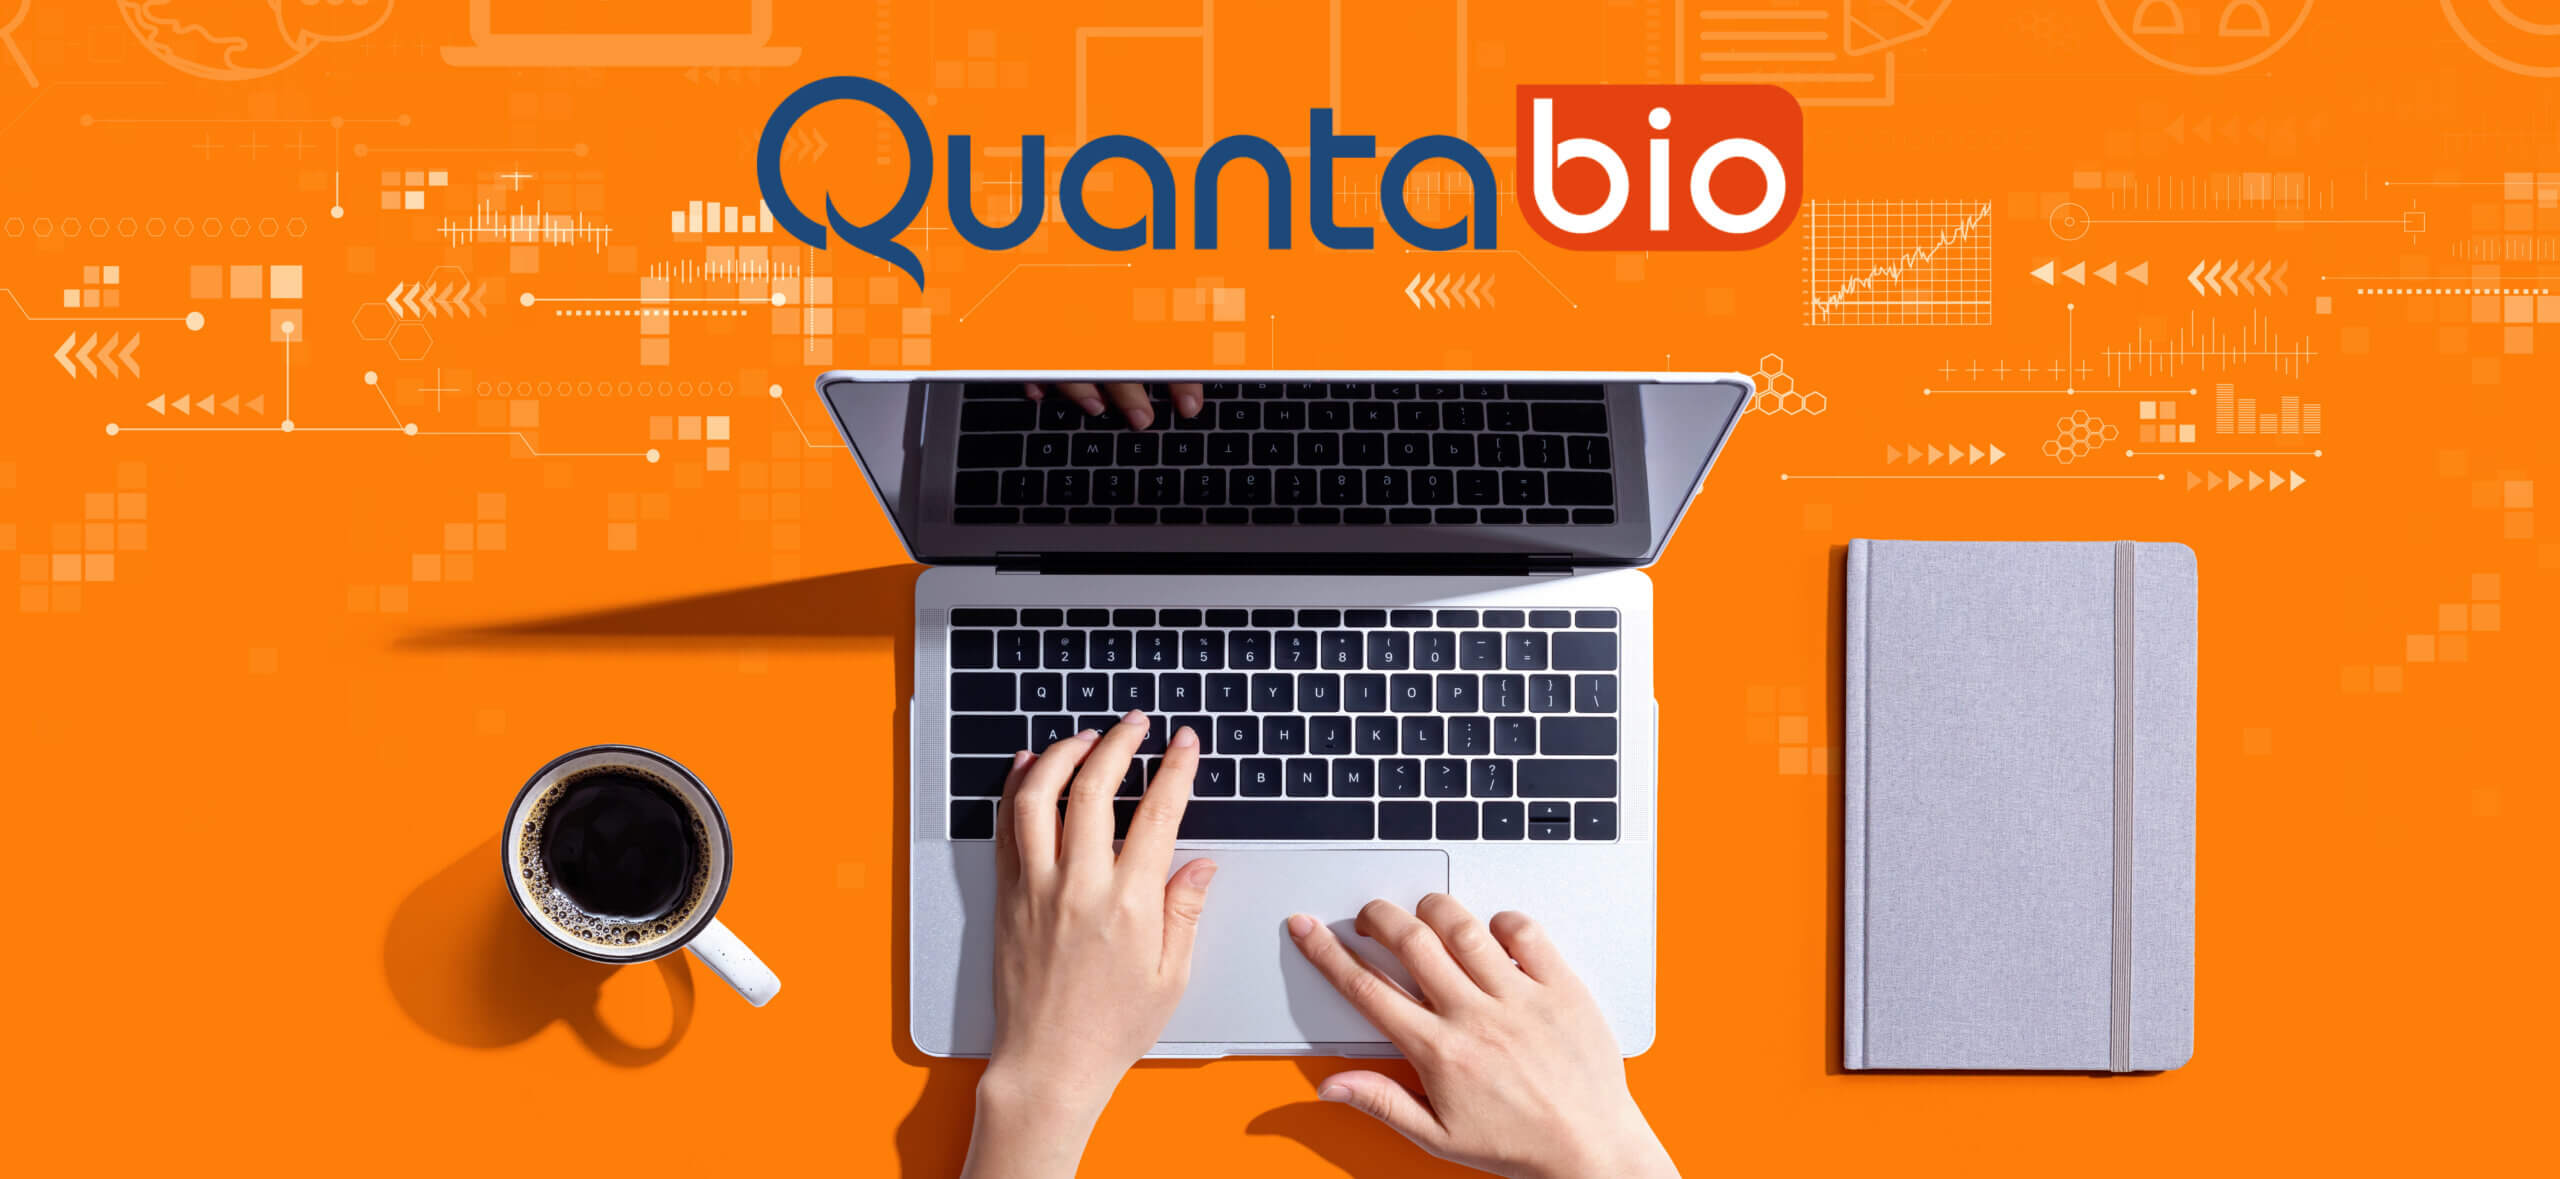 Welcome to the Quantabio Blog